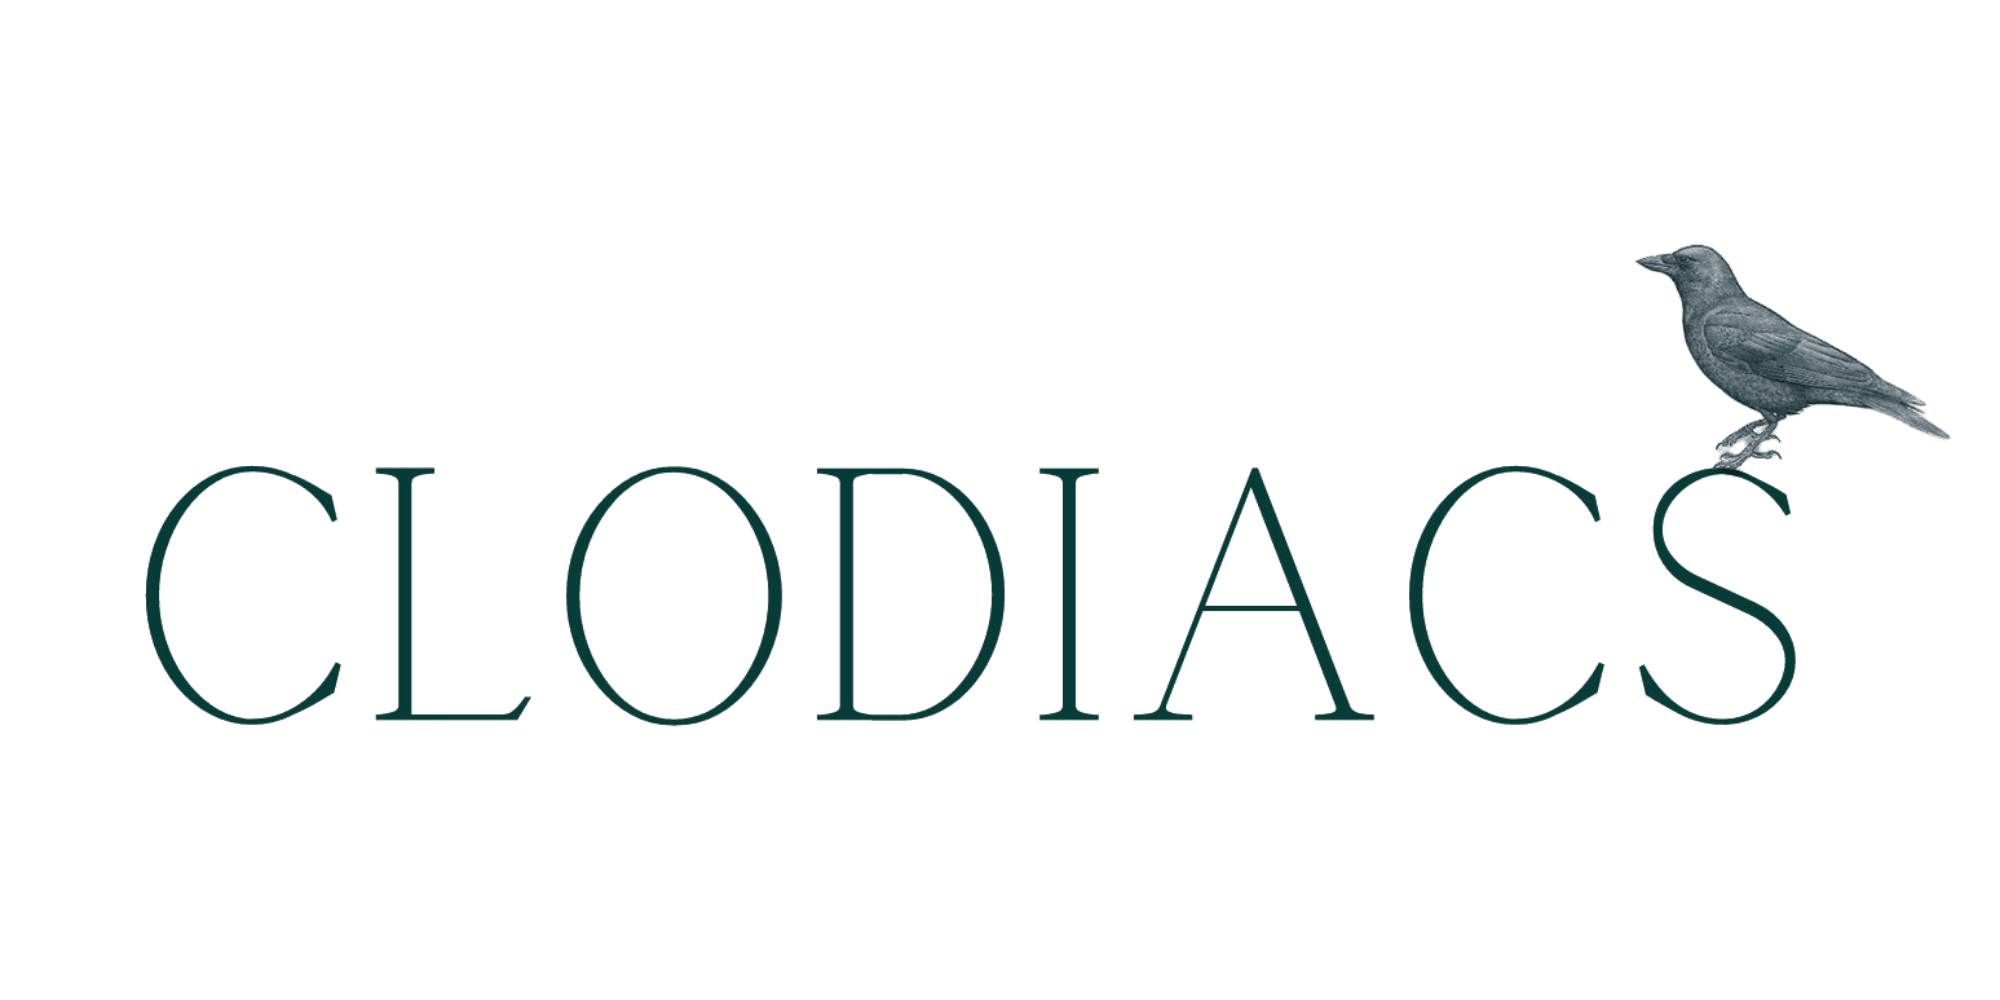 Clodiacs